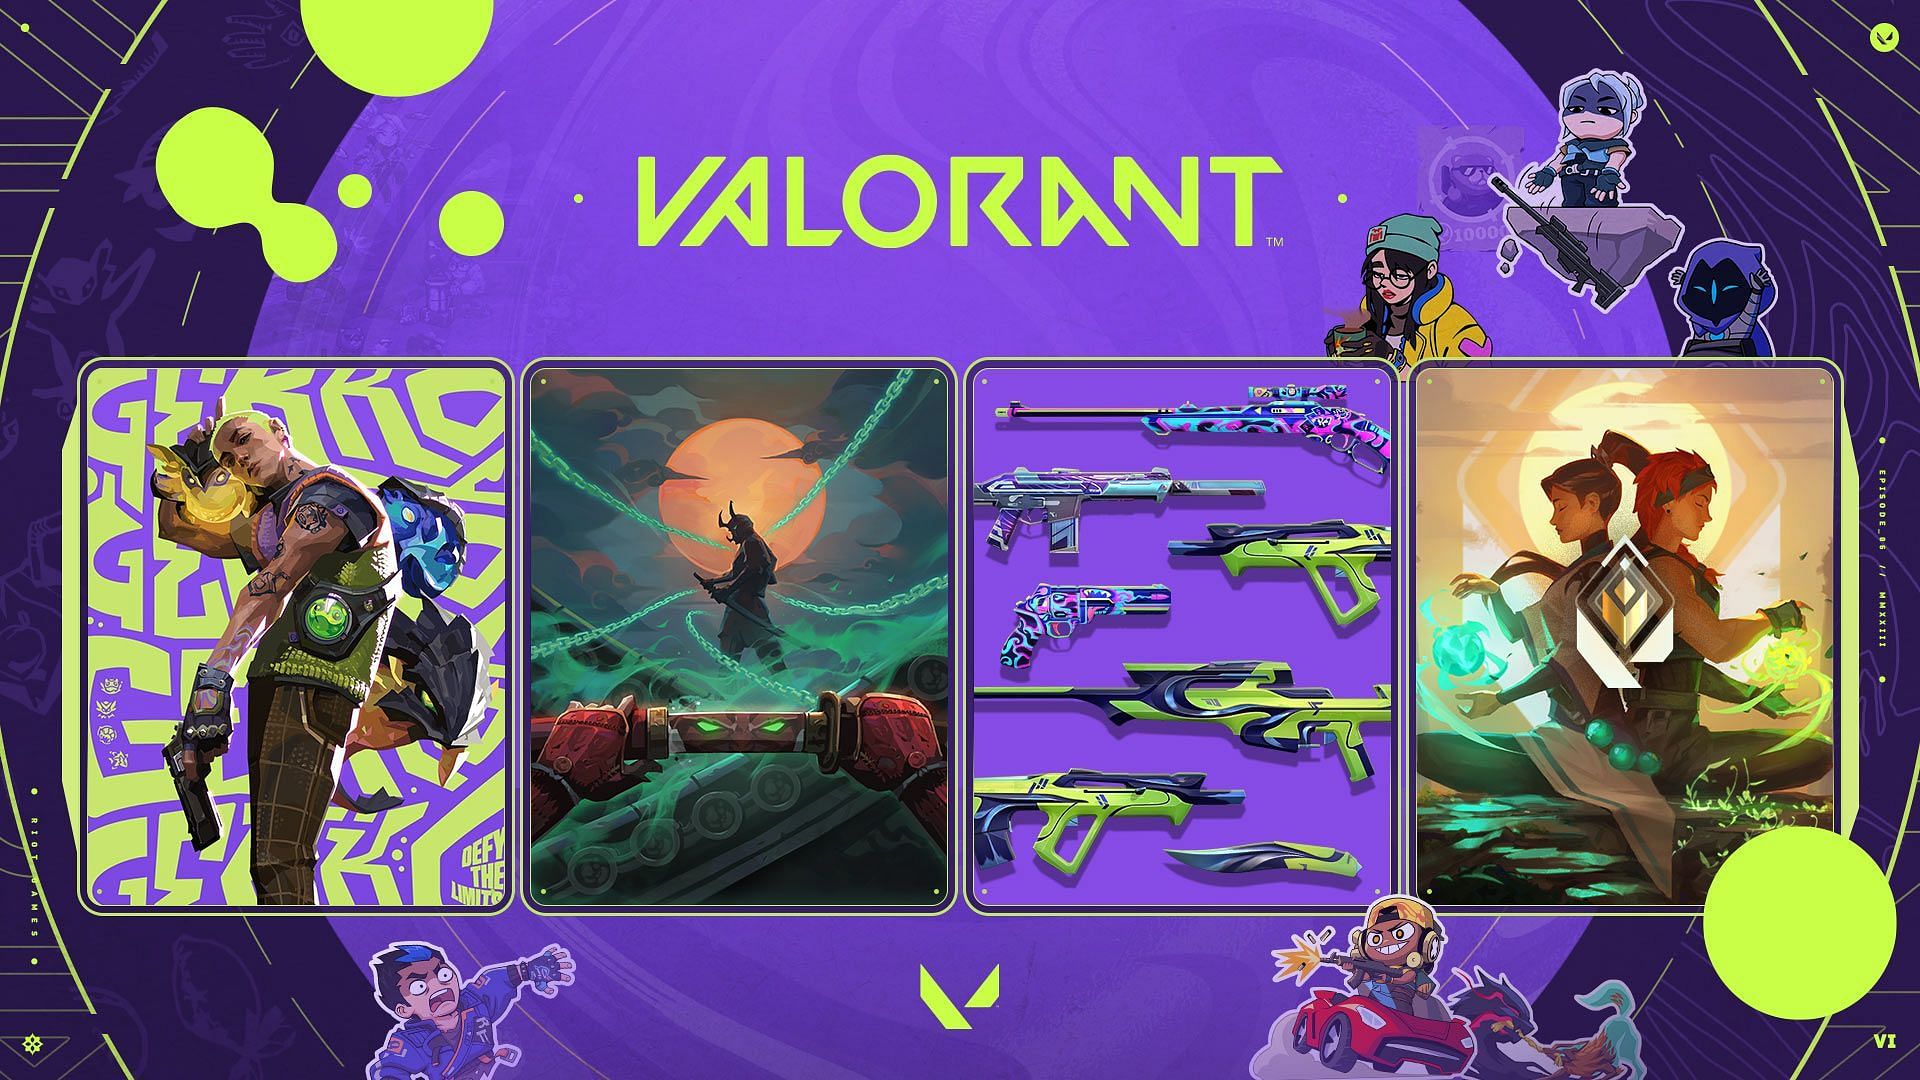 Valorant Episode 6 Act 2 Battlepass rewards (Image via Riot Games)